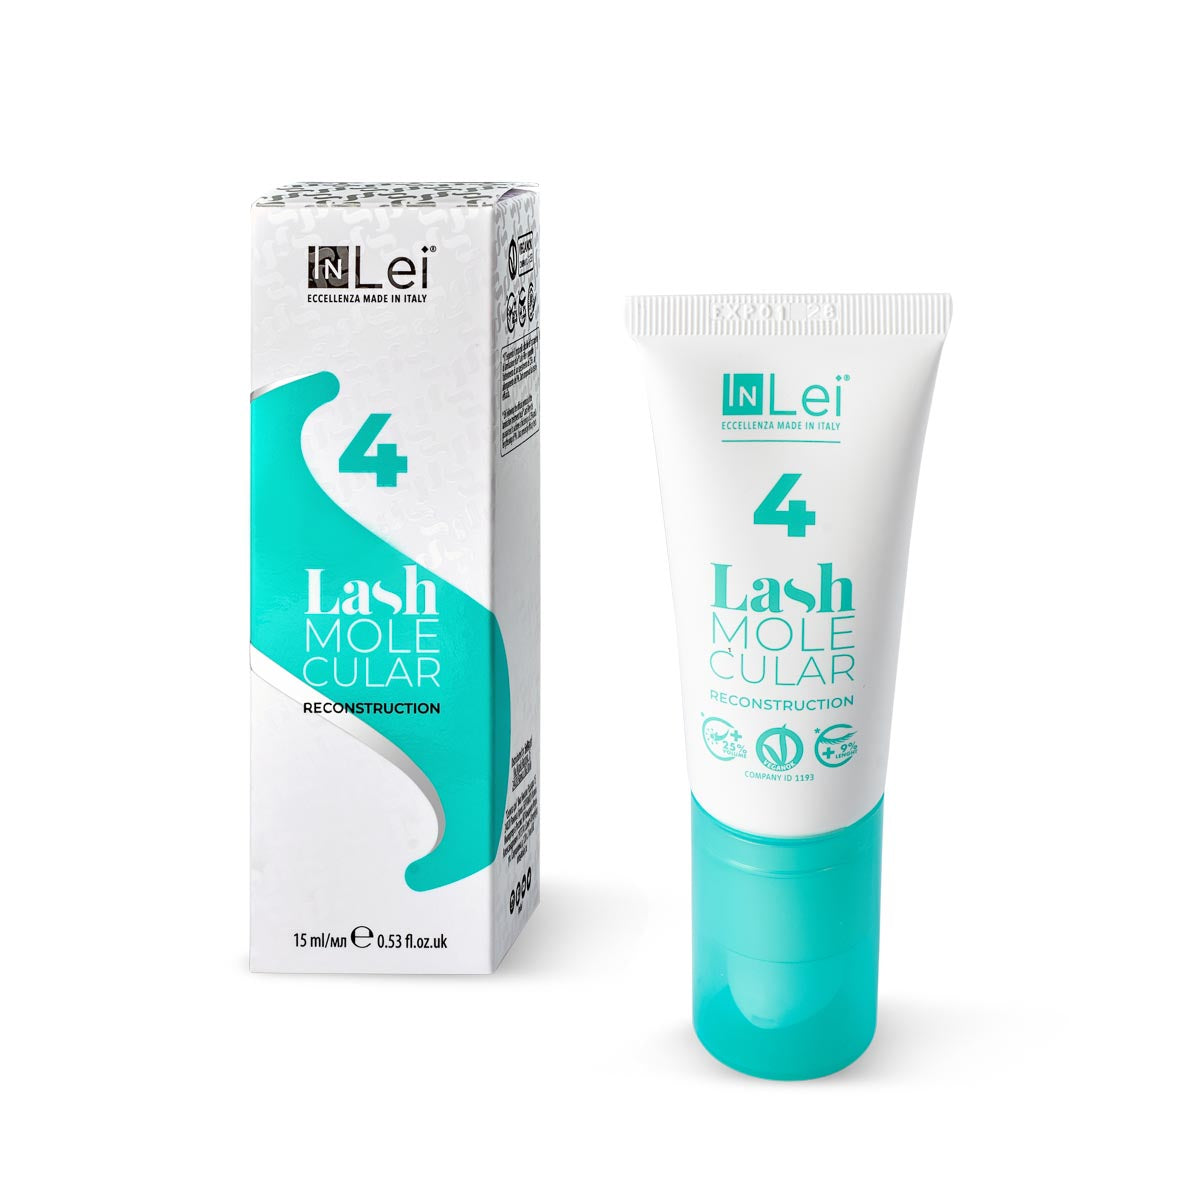 InLei- LASH MOLECULAR 4 - 15ml bottle - 25.9 series